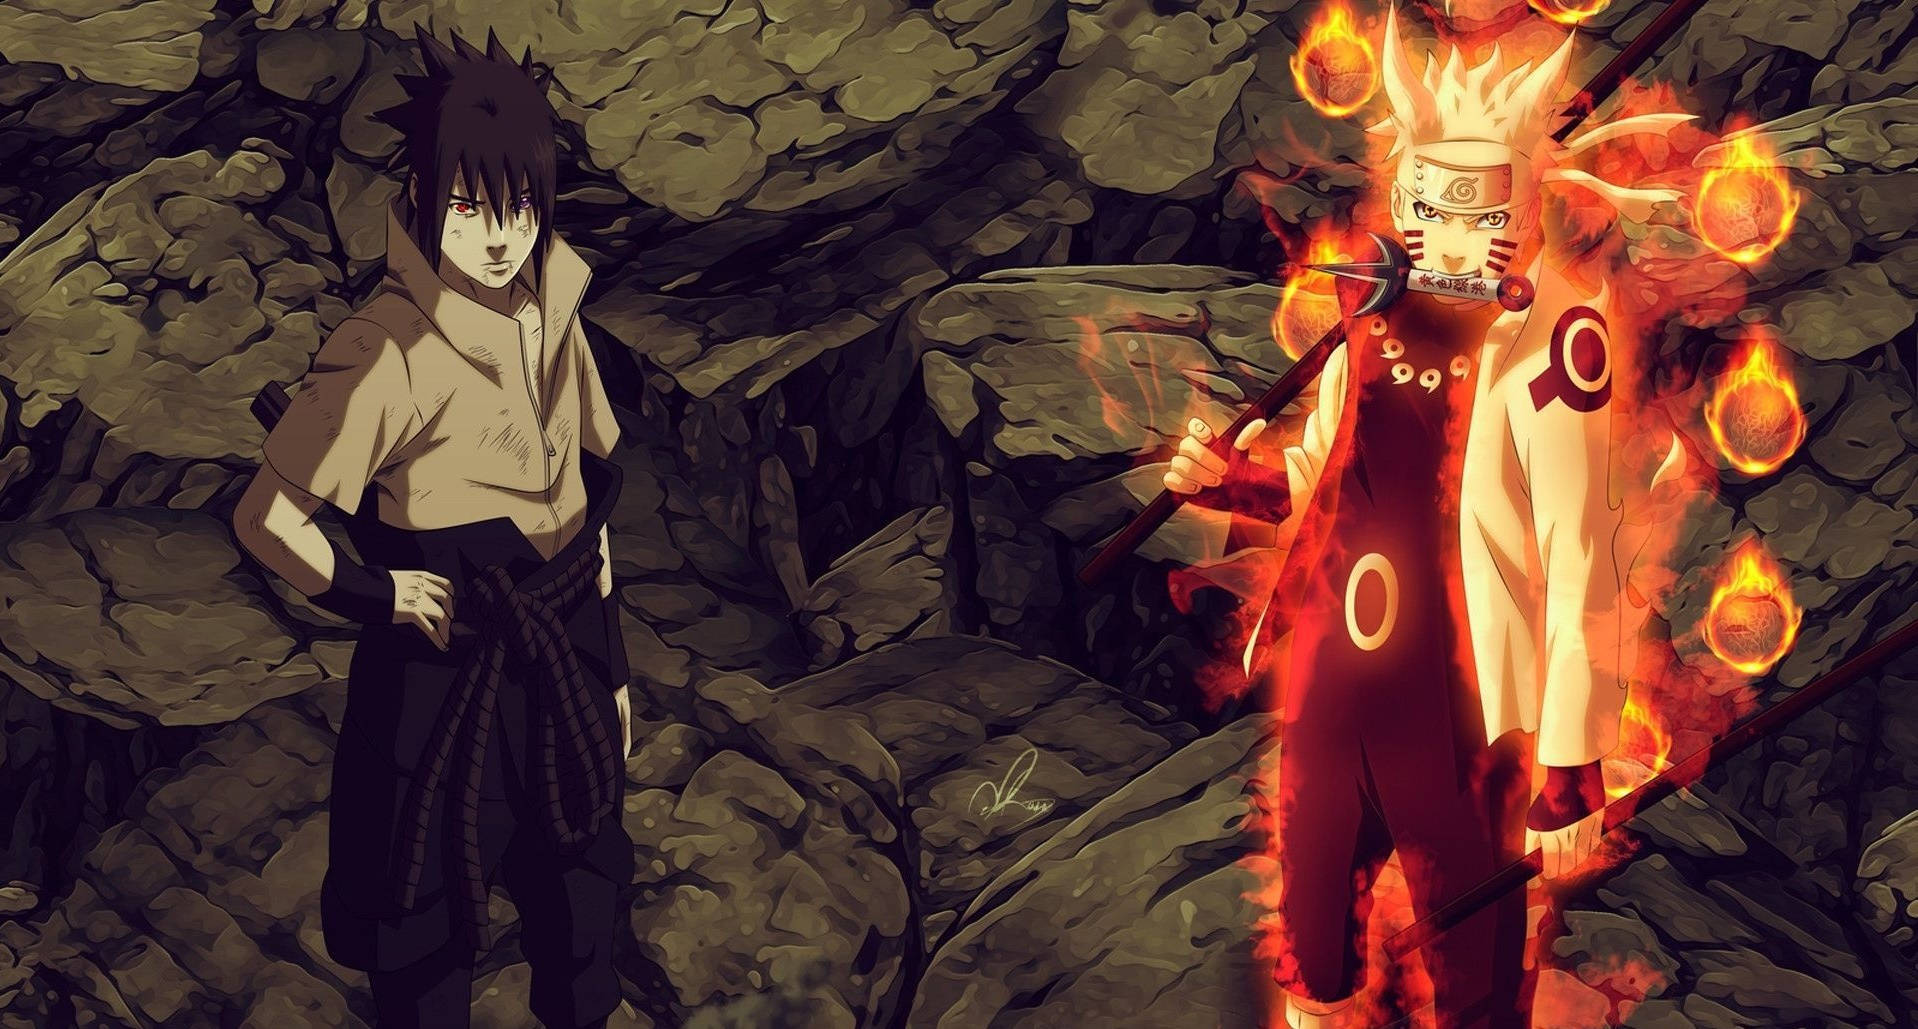 Anime Naruto Fighting Together With Sasuke Uchiha Picture